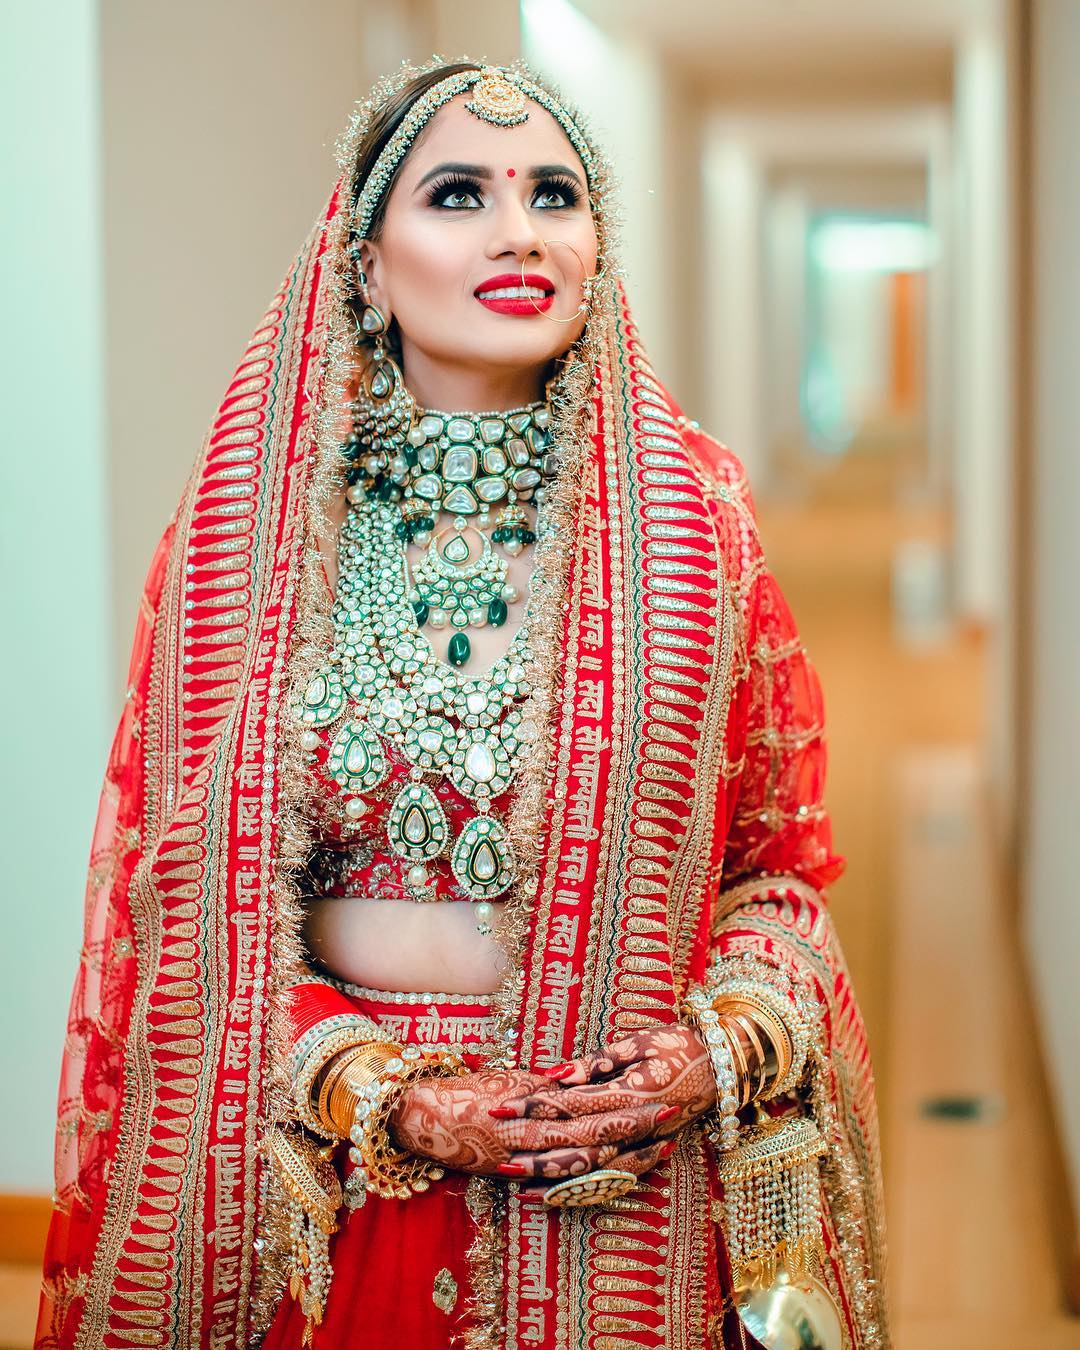 Bali Destination Wedding Of A Fashion Entrepreneur Who Slayed In Deepika's  Wedding Lehenga! | Sabyasachi lehenga, Bride, Bali wedding